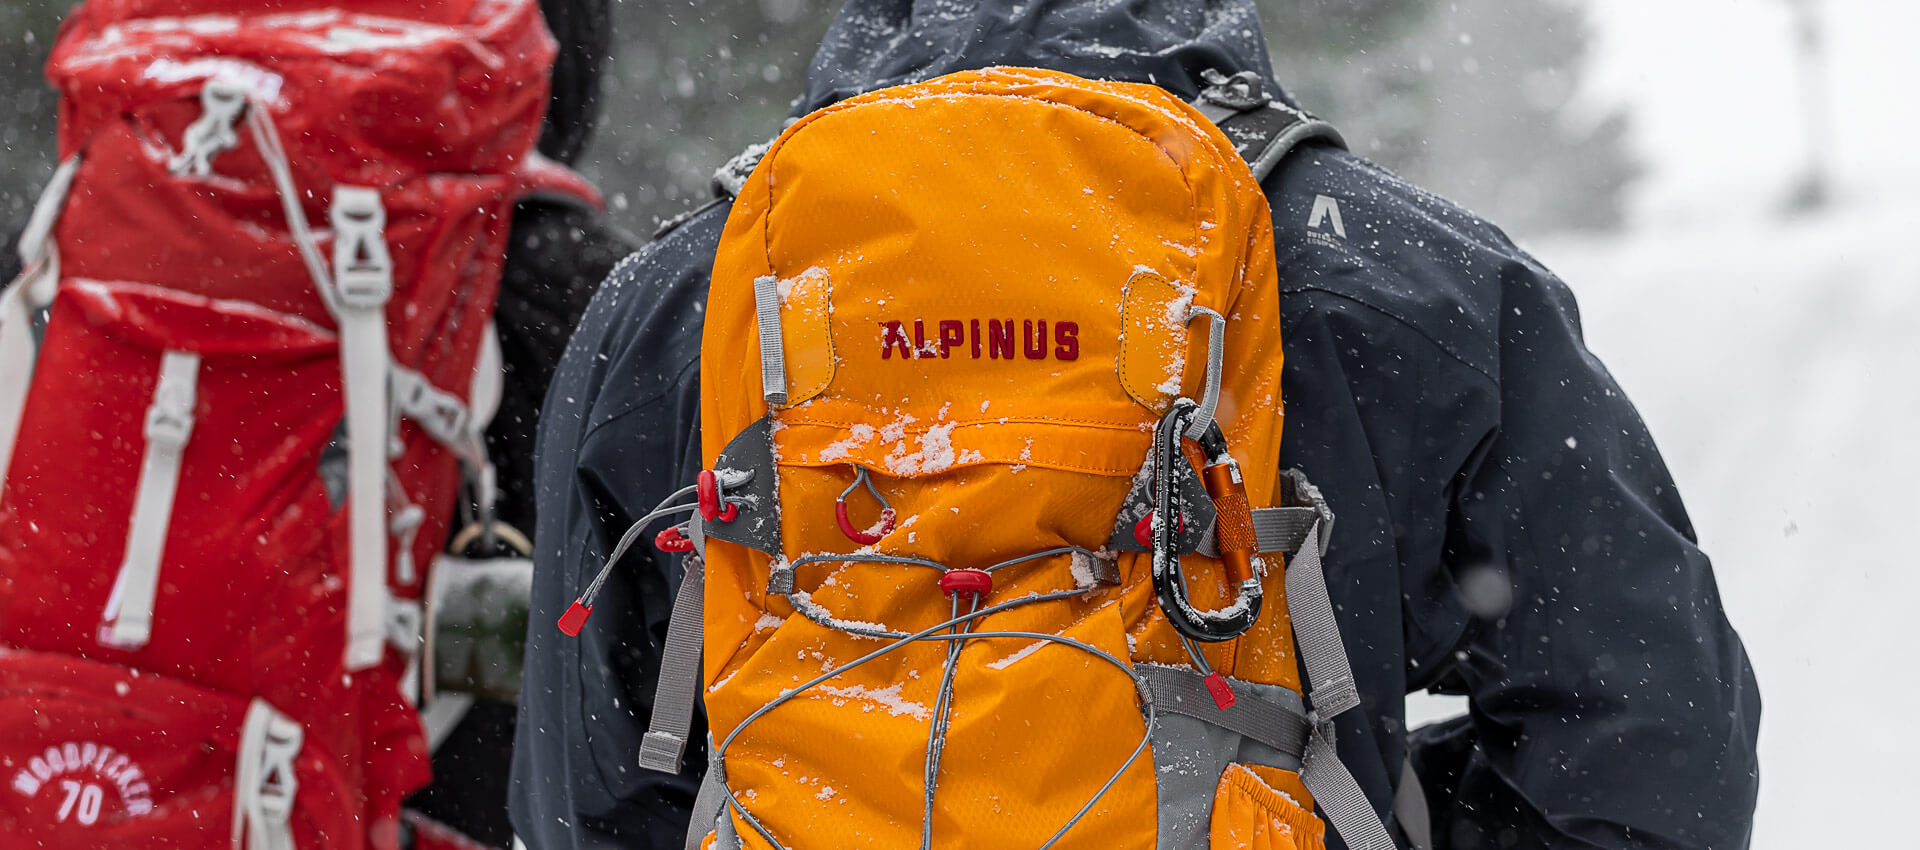 alpinus_1.jpg